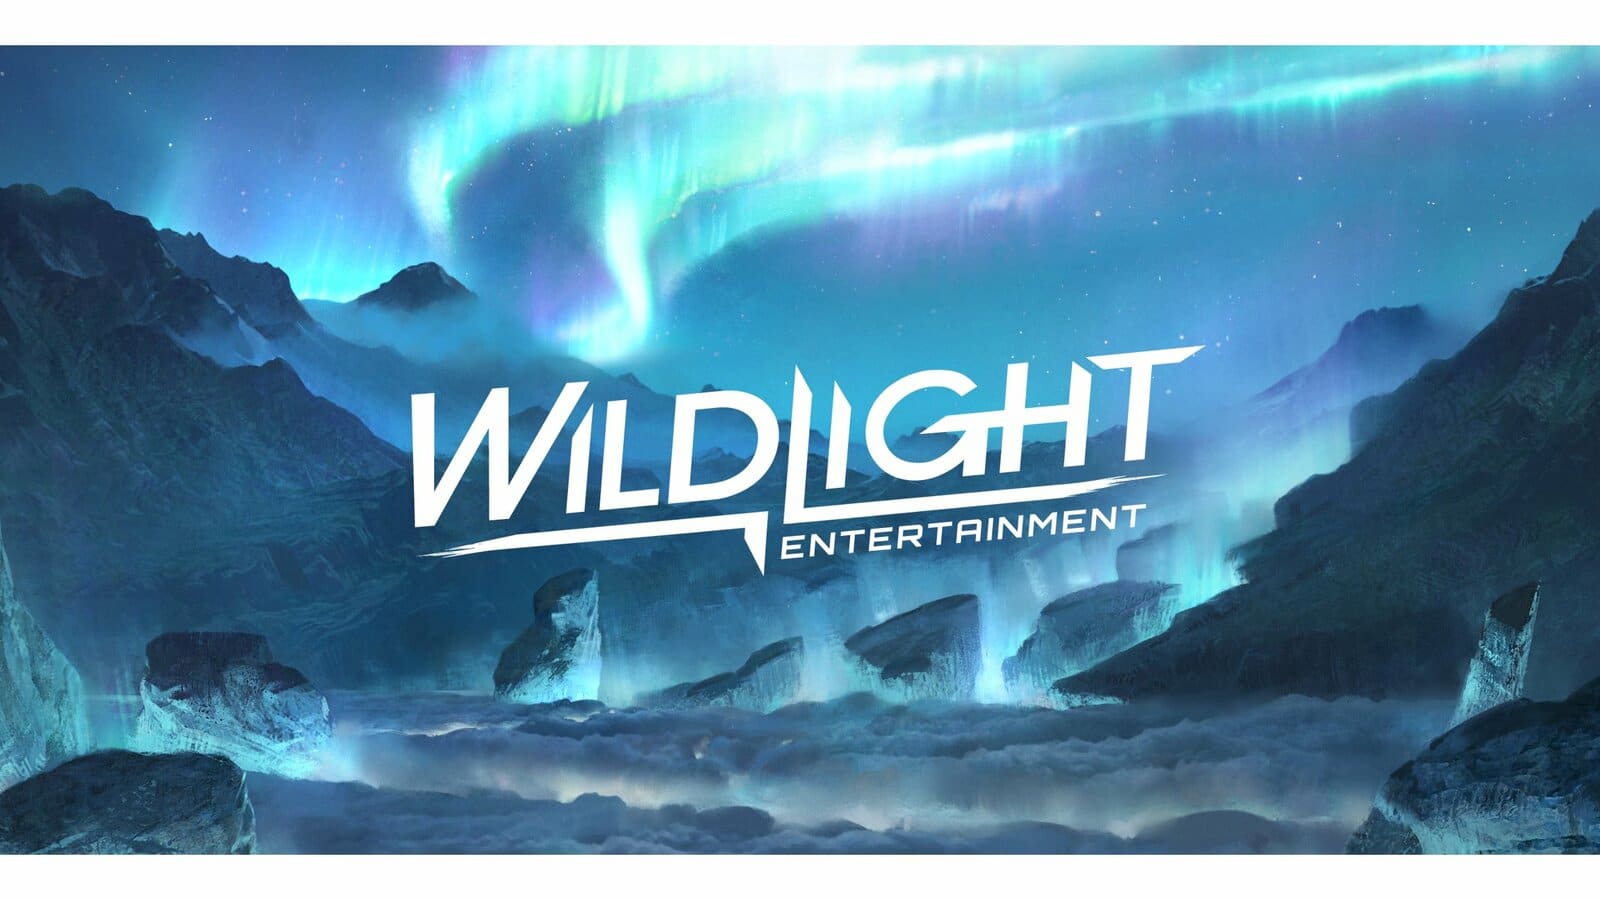 Wildlight Entertainment